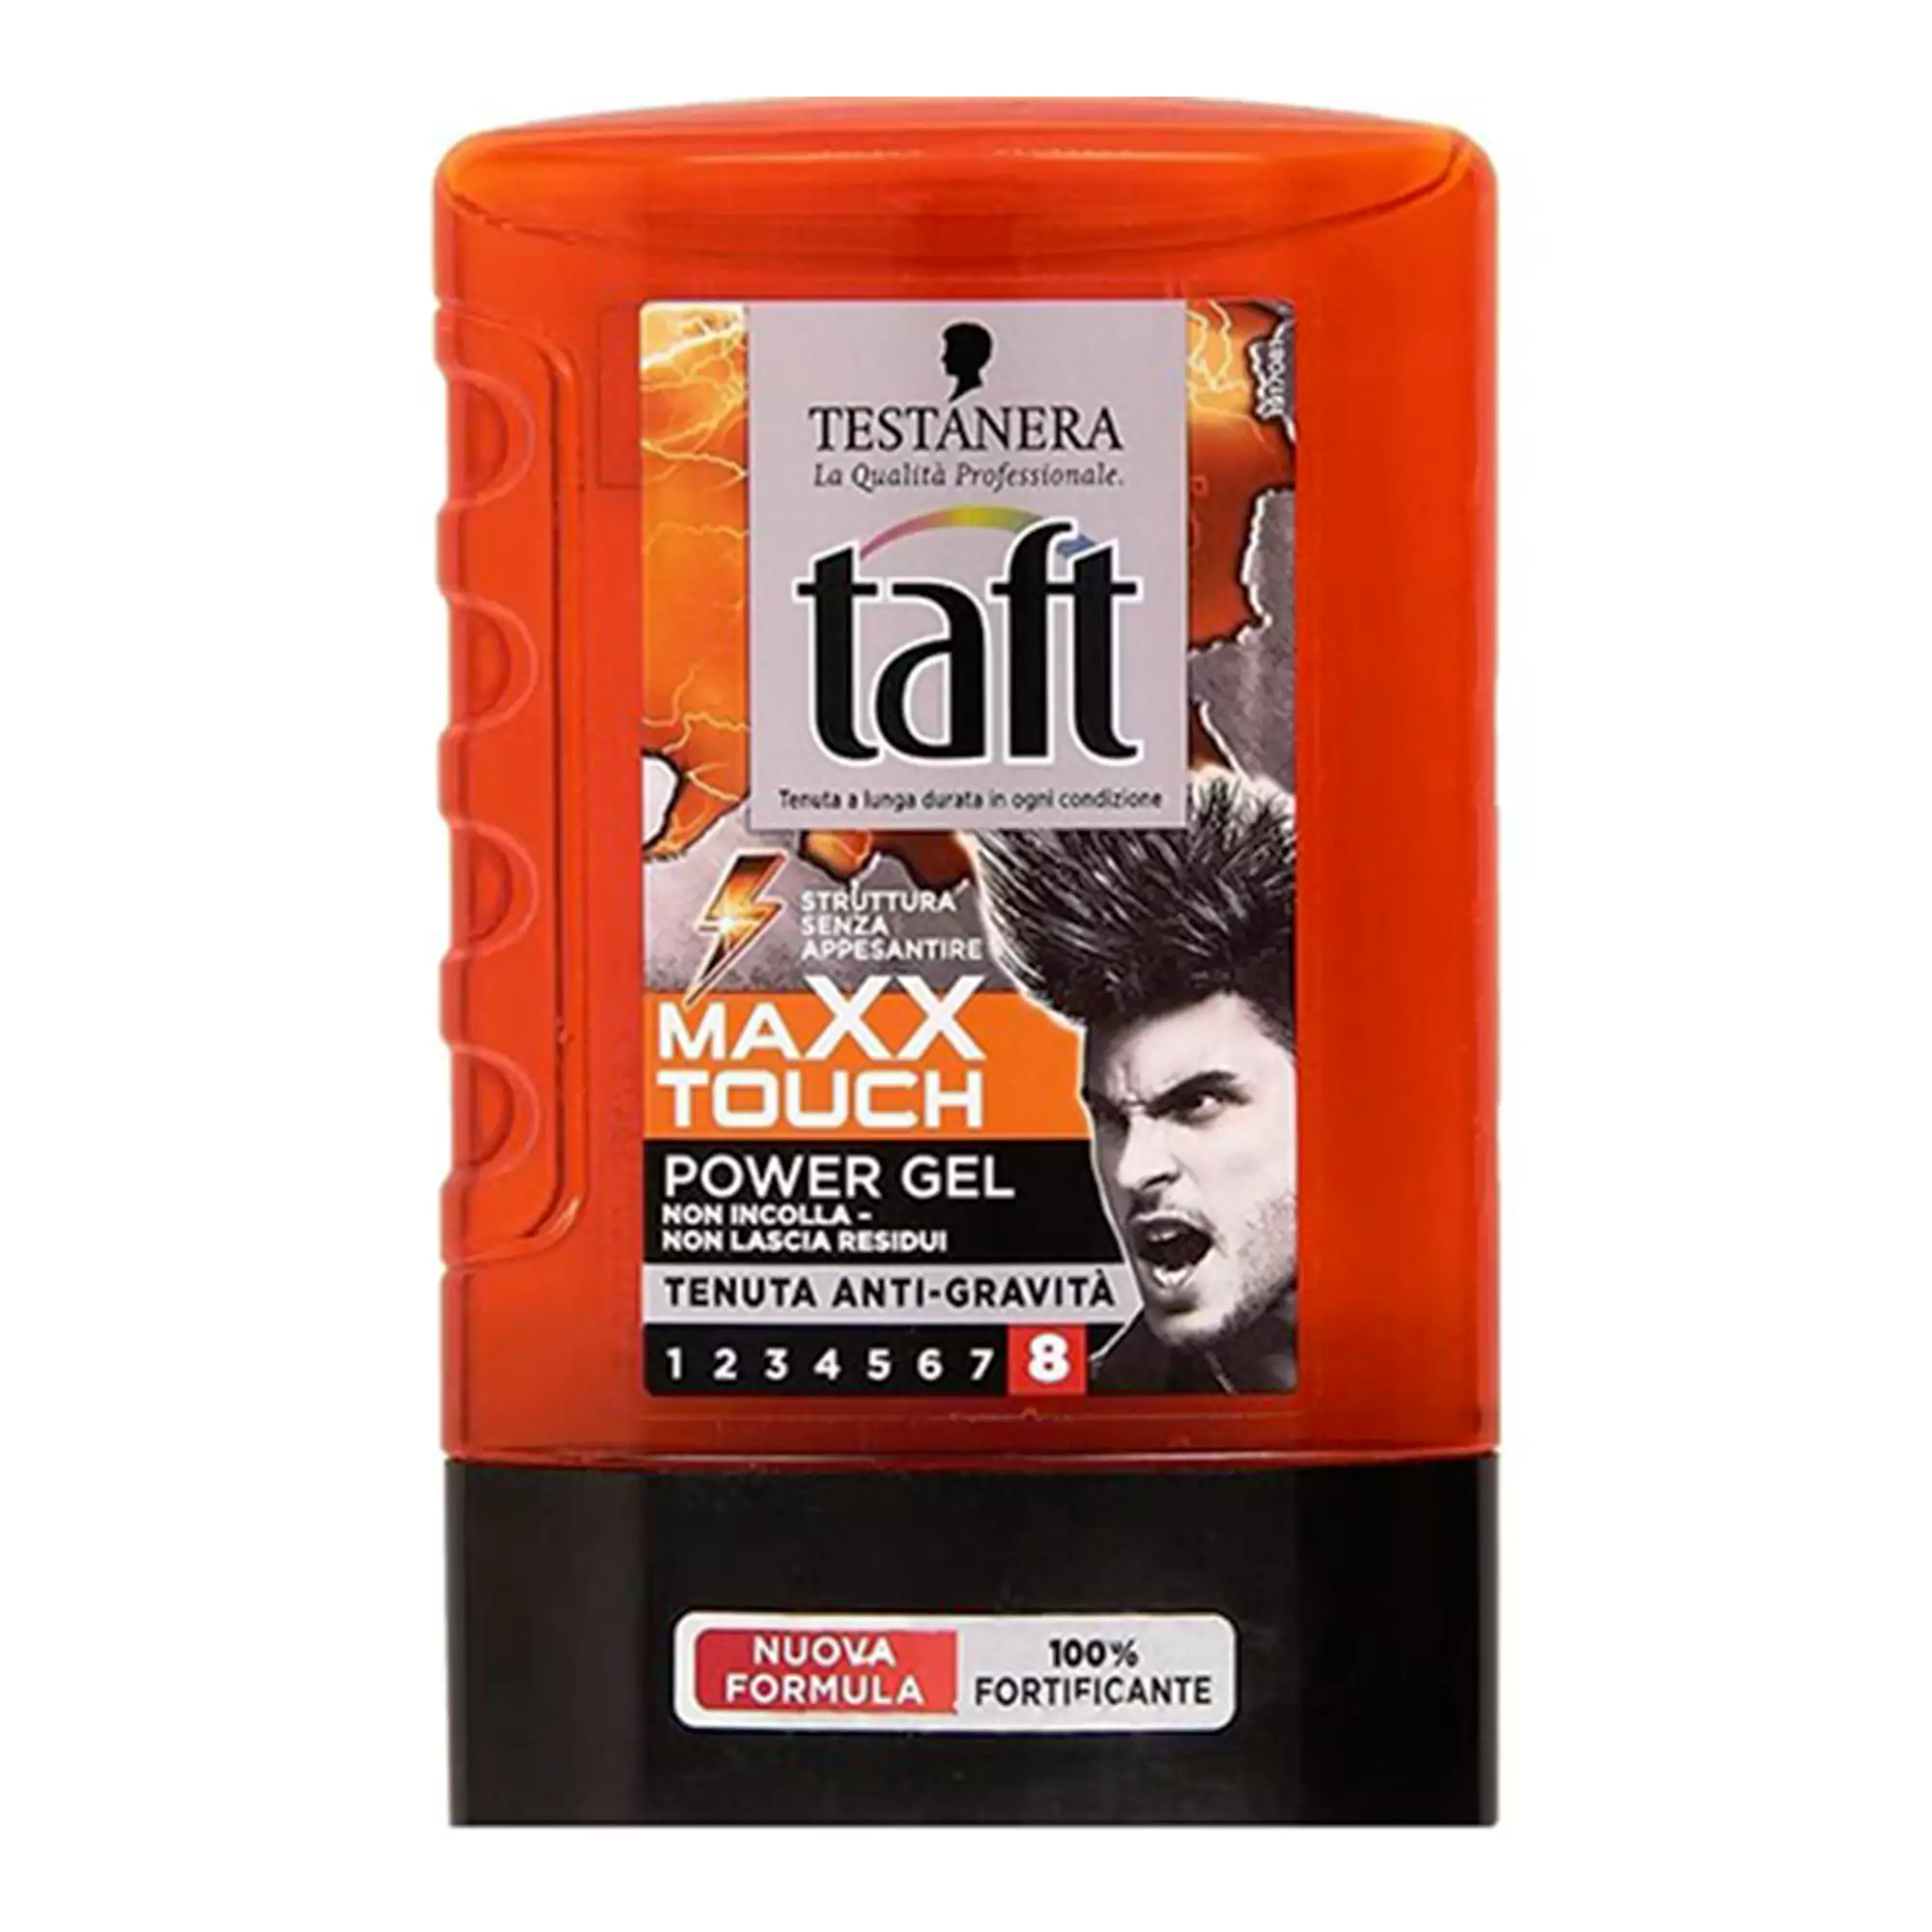 Taft Gel Μαλλιών Maxx Power No 08 300ml - Femme Fatale - Taft Gel Μαλλιών Maxx Power No 08 300ml